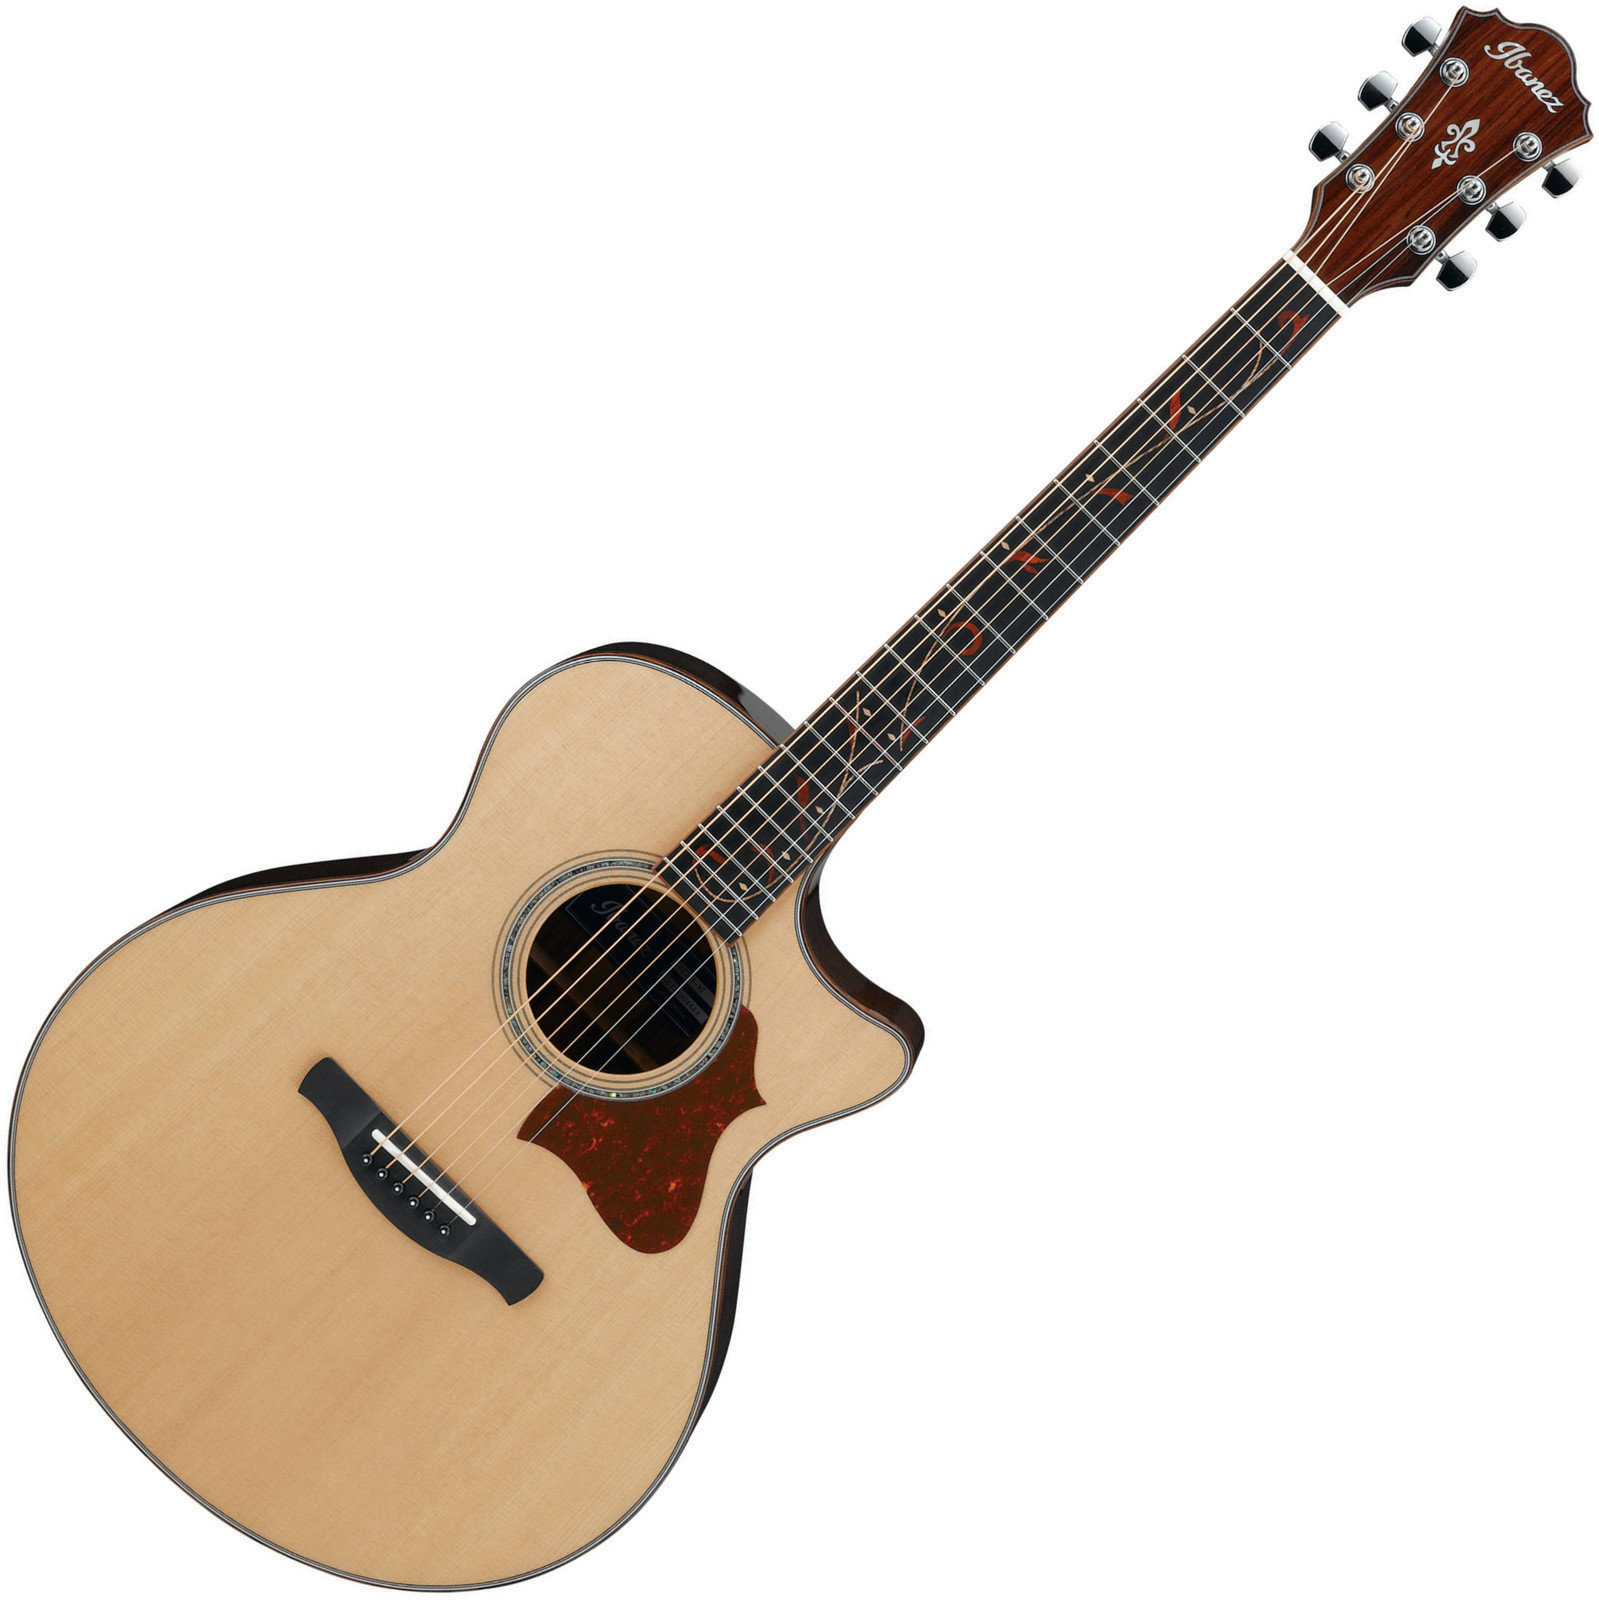 Jumbo elektro-akoestische gitaar Ibanez AE315 Natural High Gloss